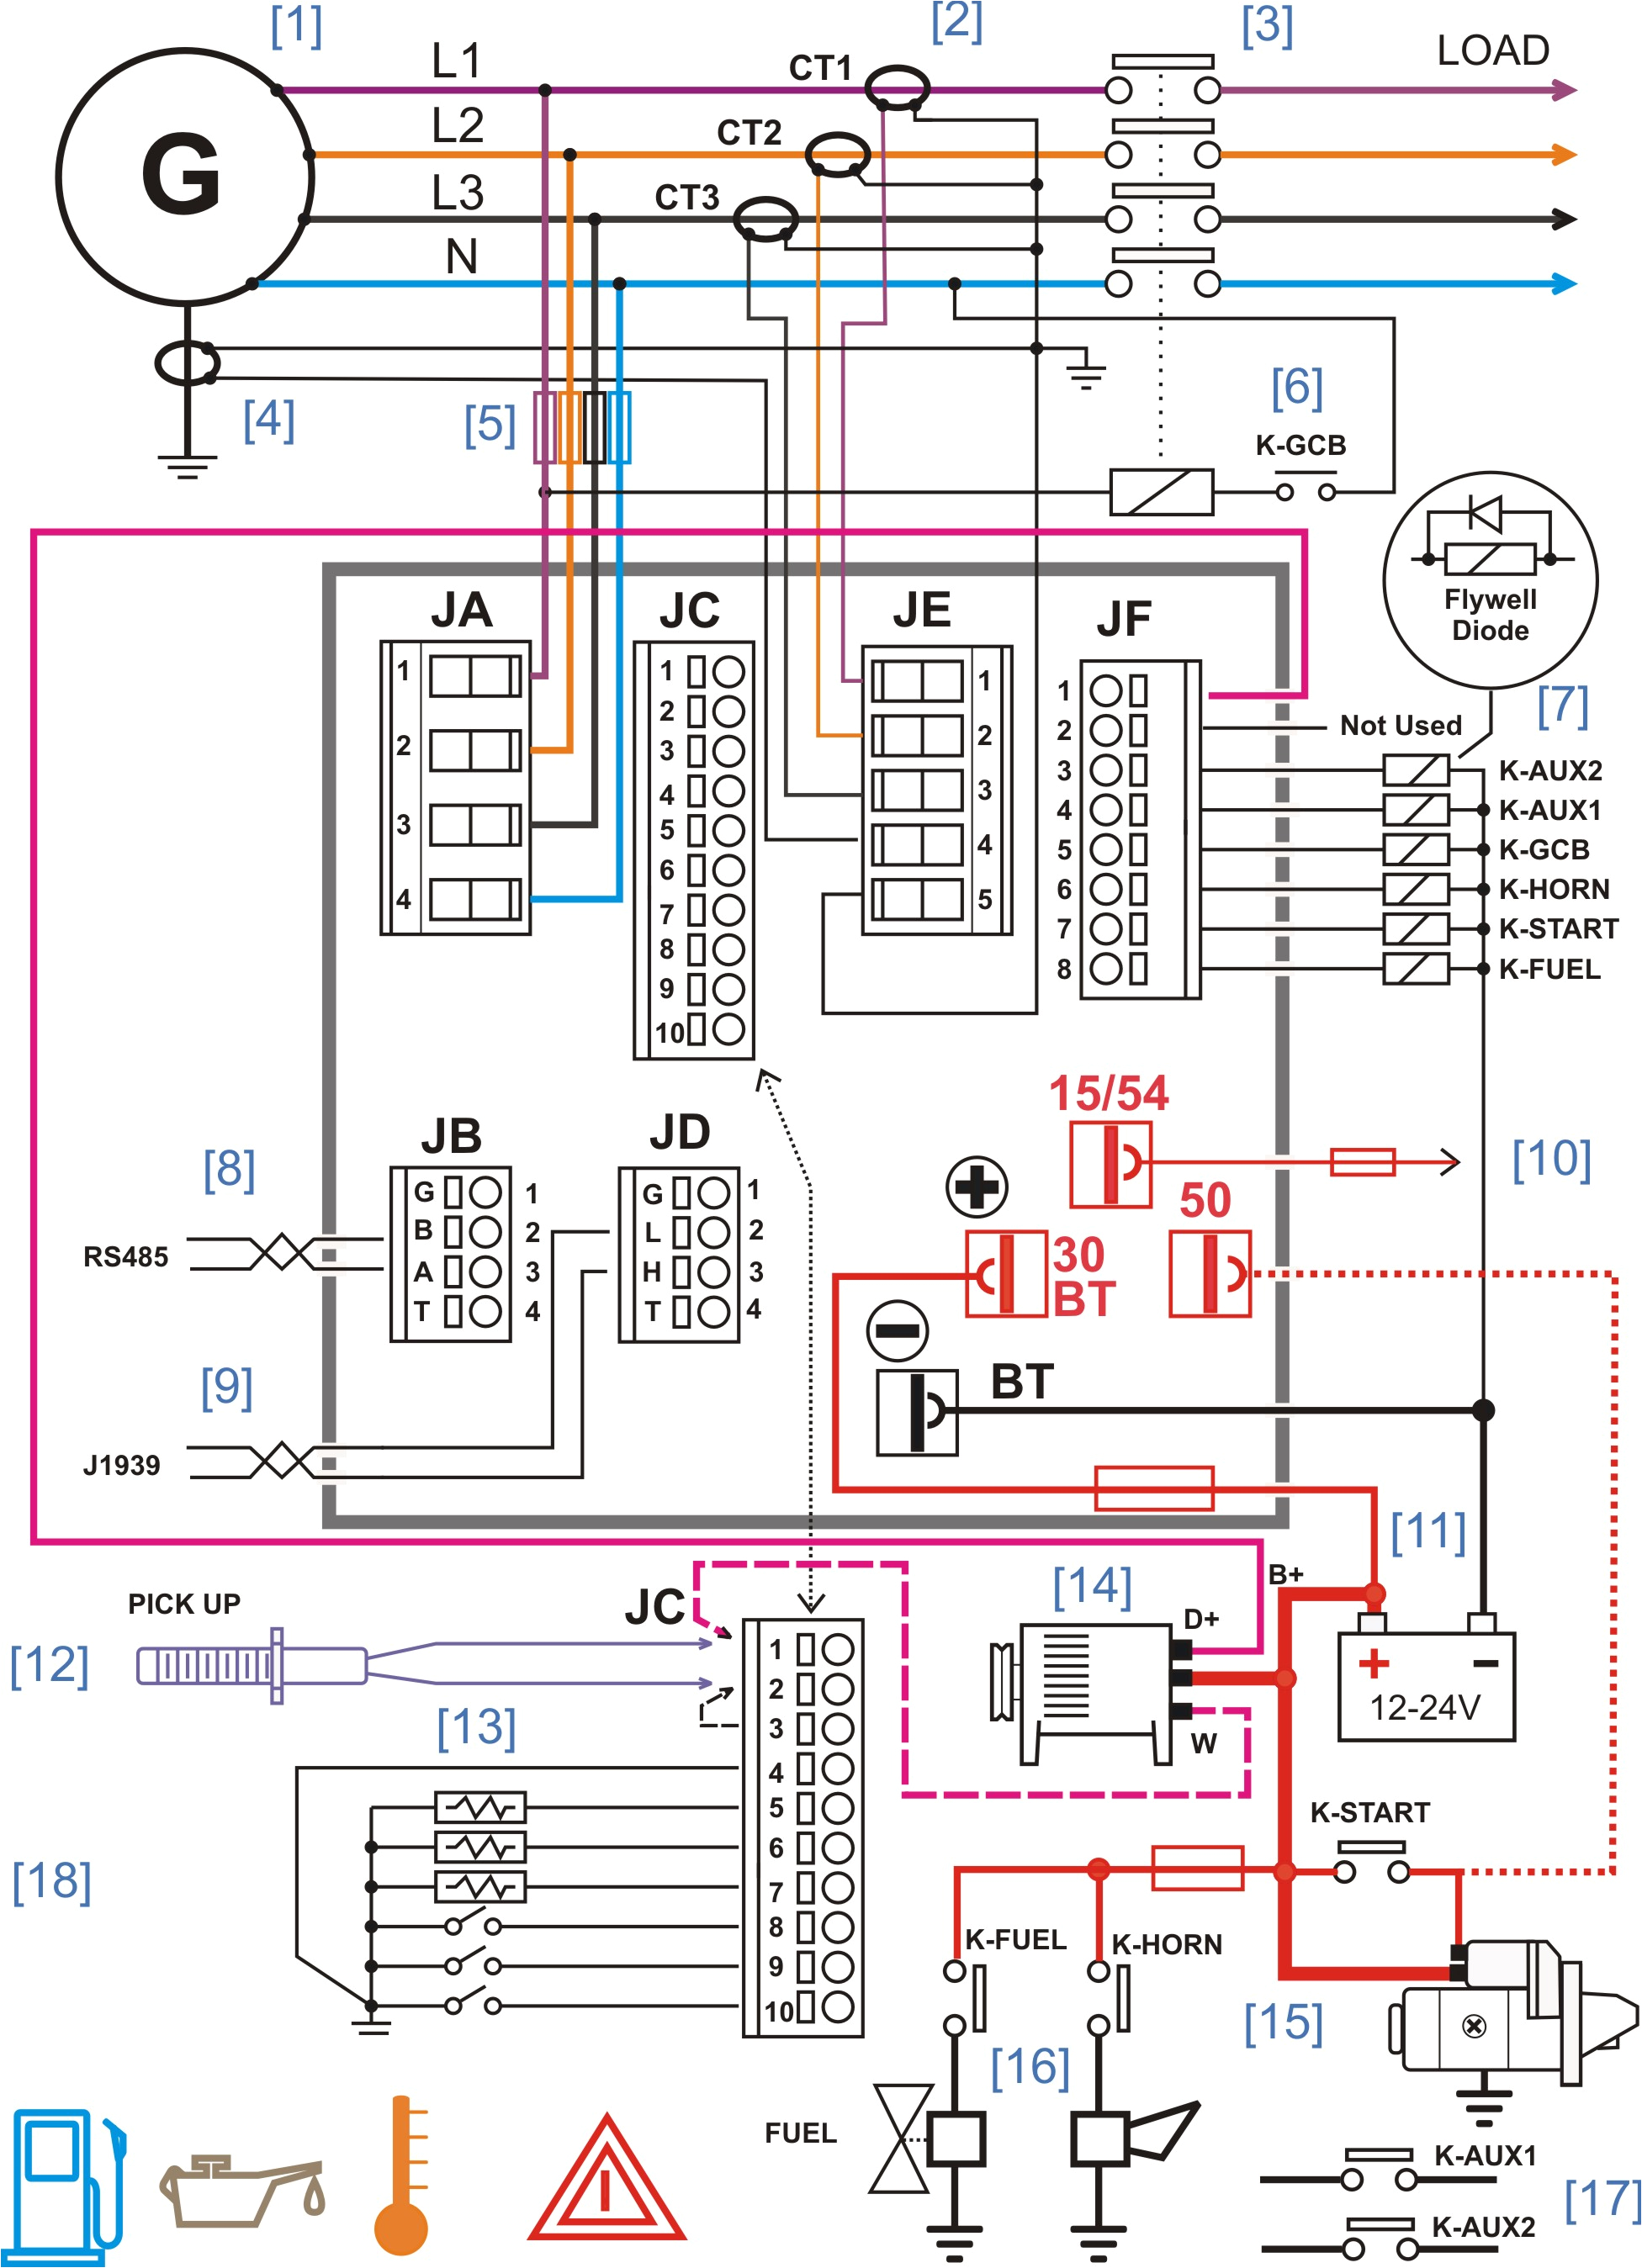 control cabinet wire diagram book diagram schema dictator fuel management wiring diagram control panel wiring standards